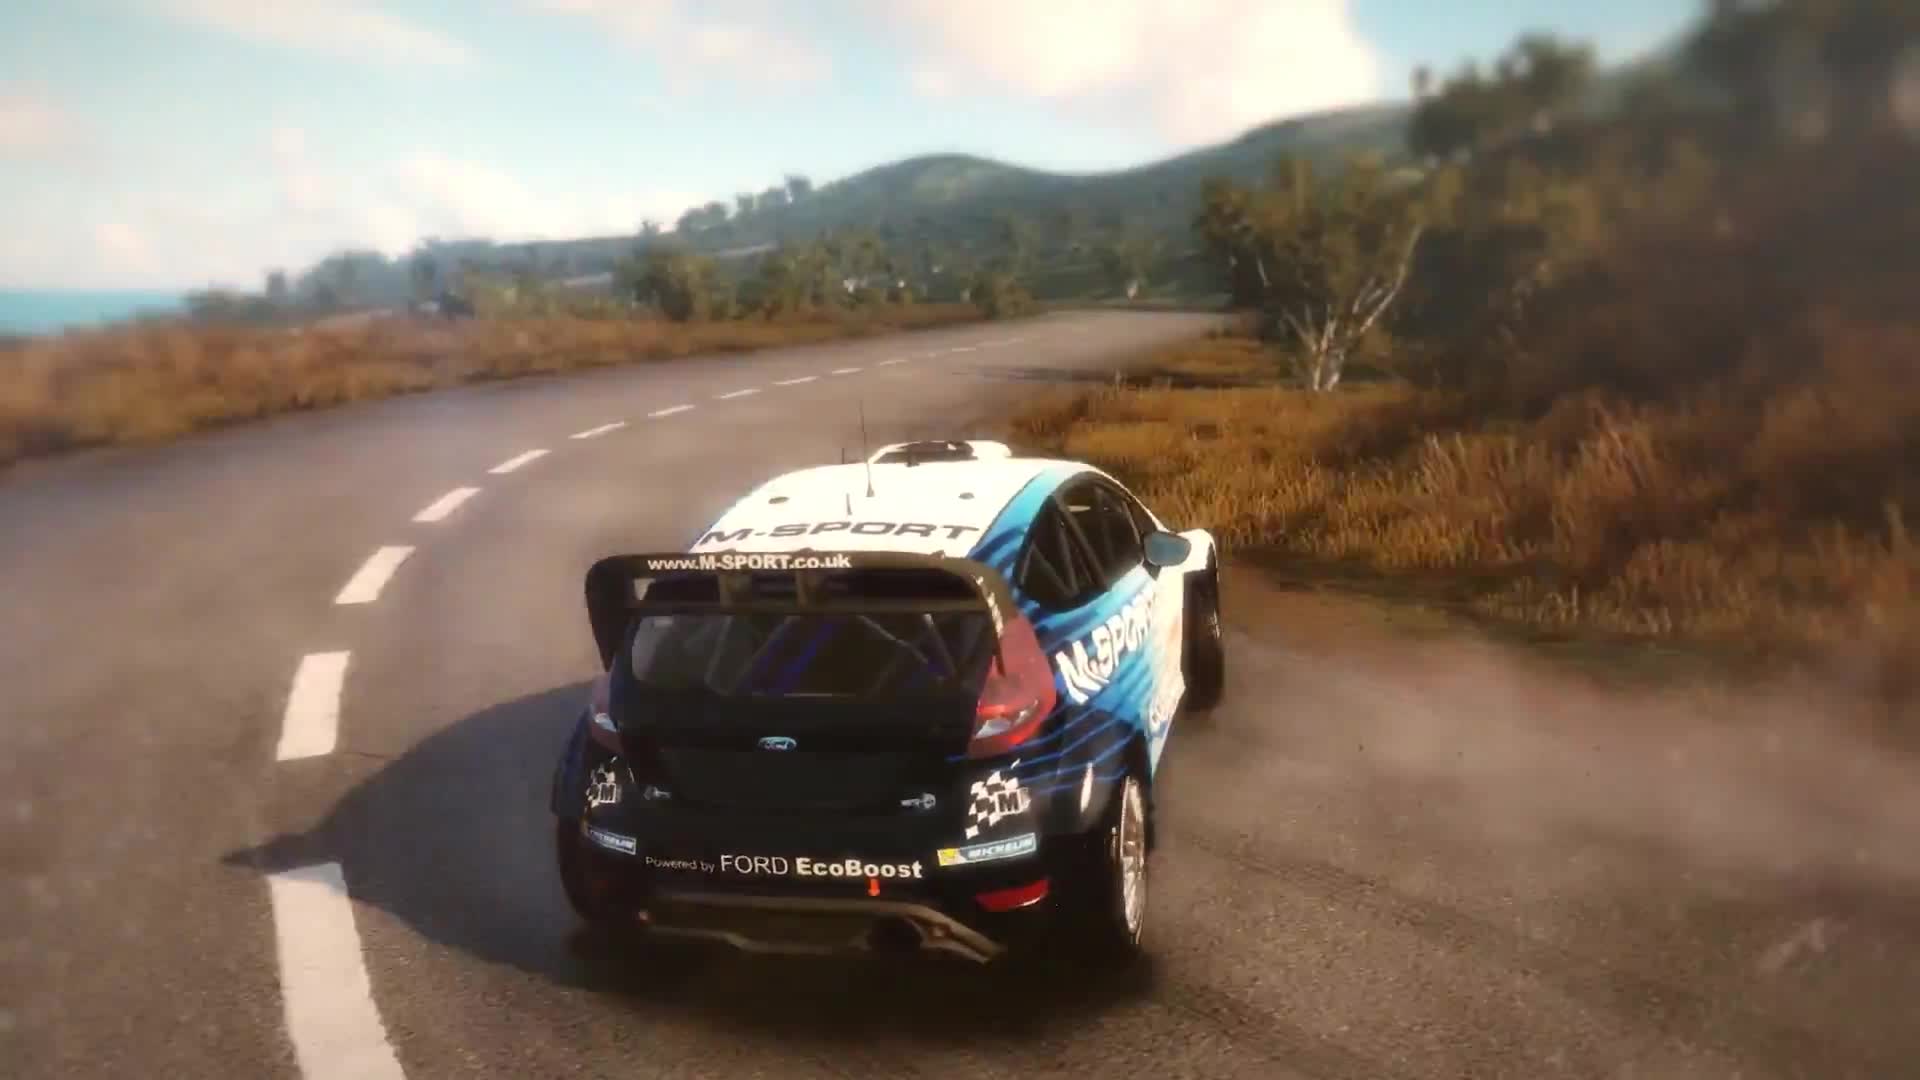 WRC 5 - Announcement Trailer